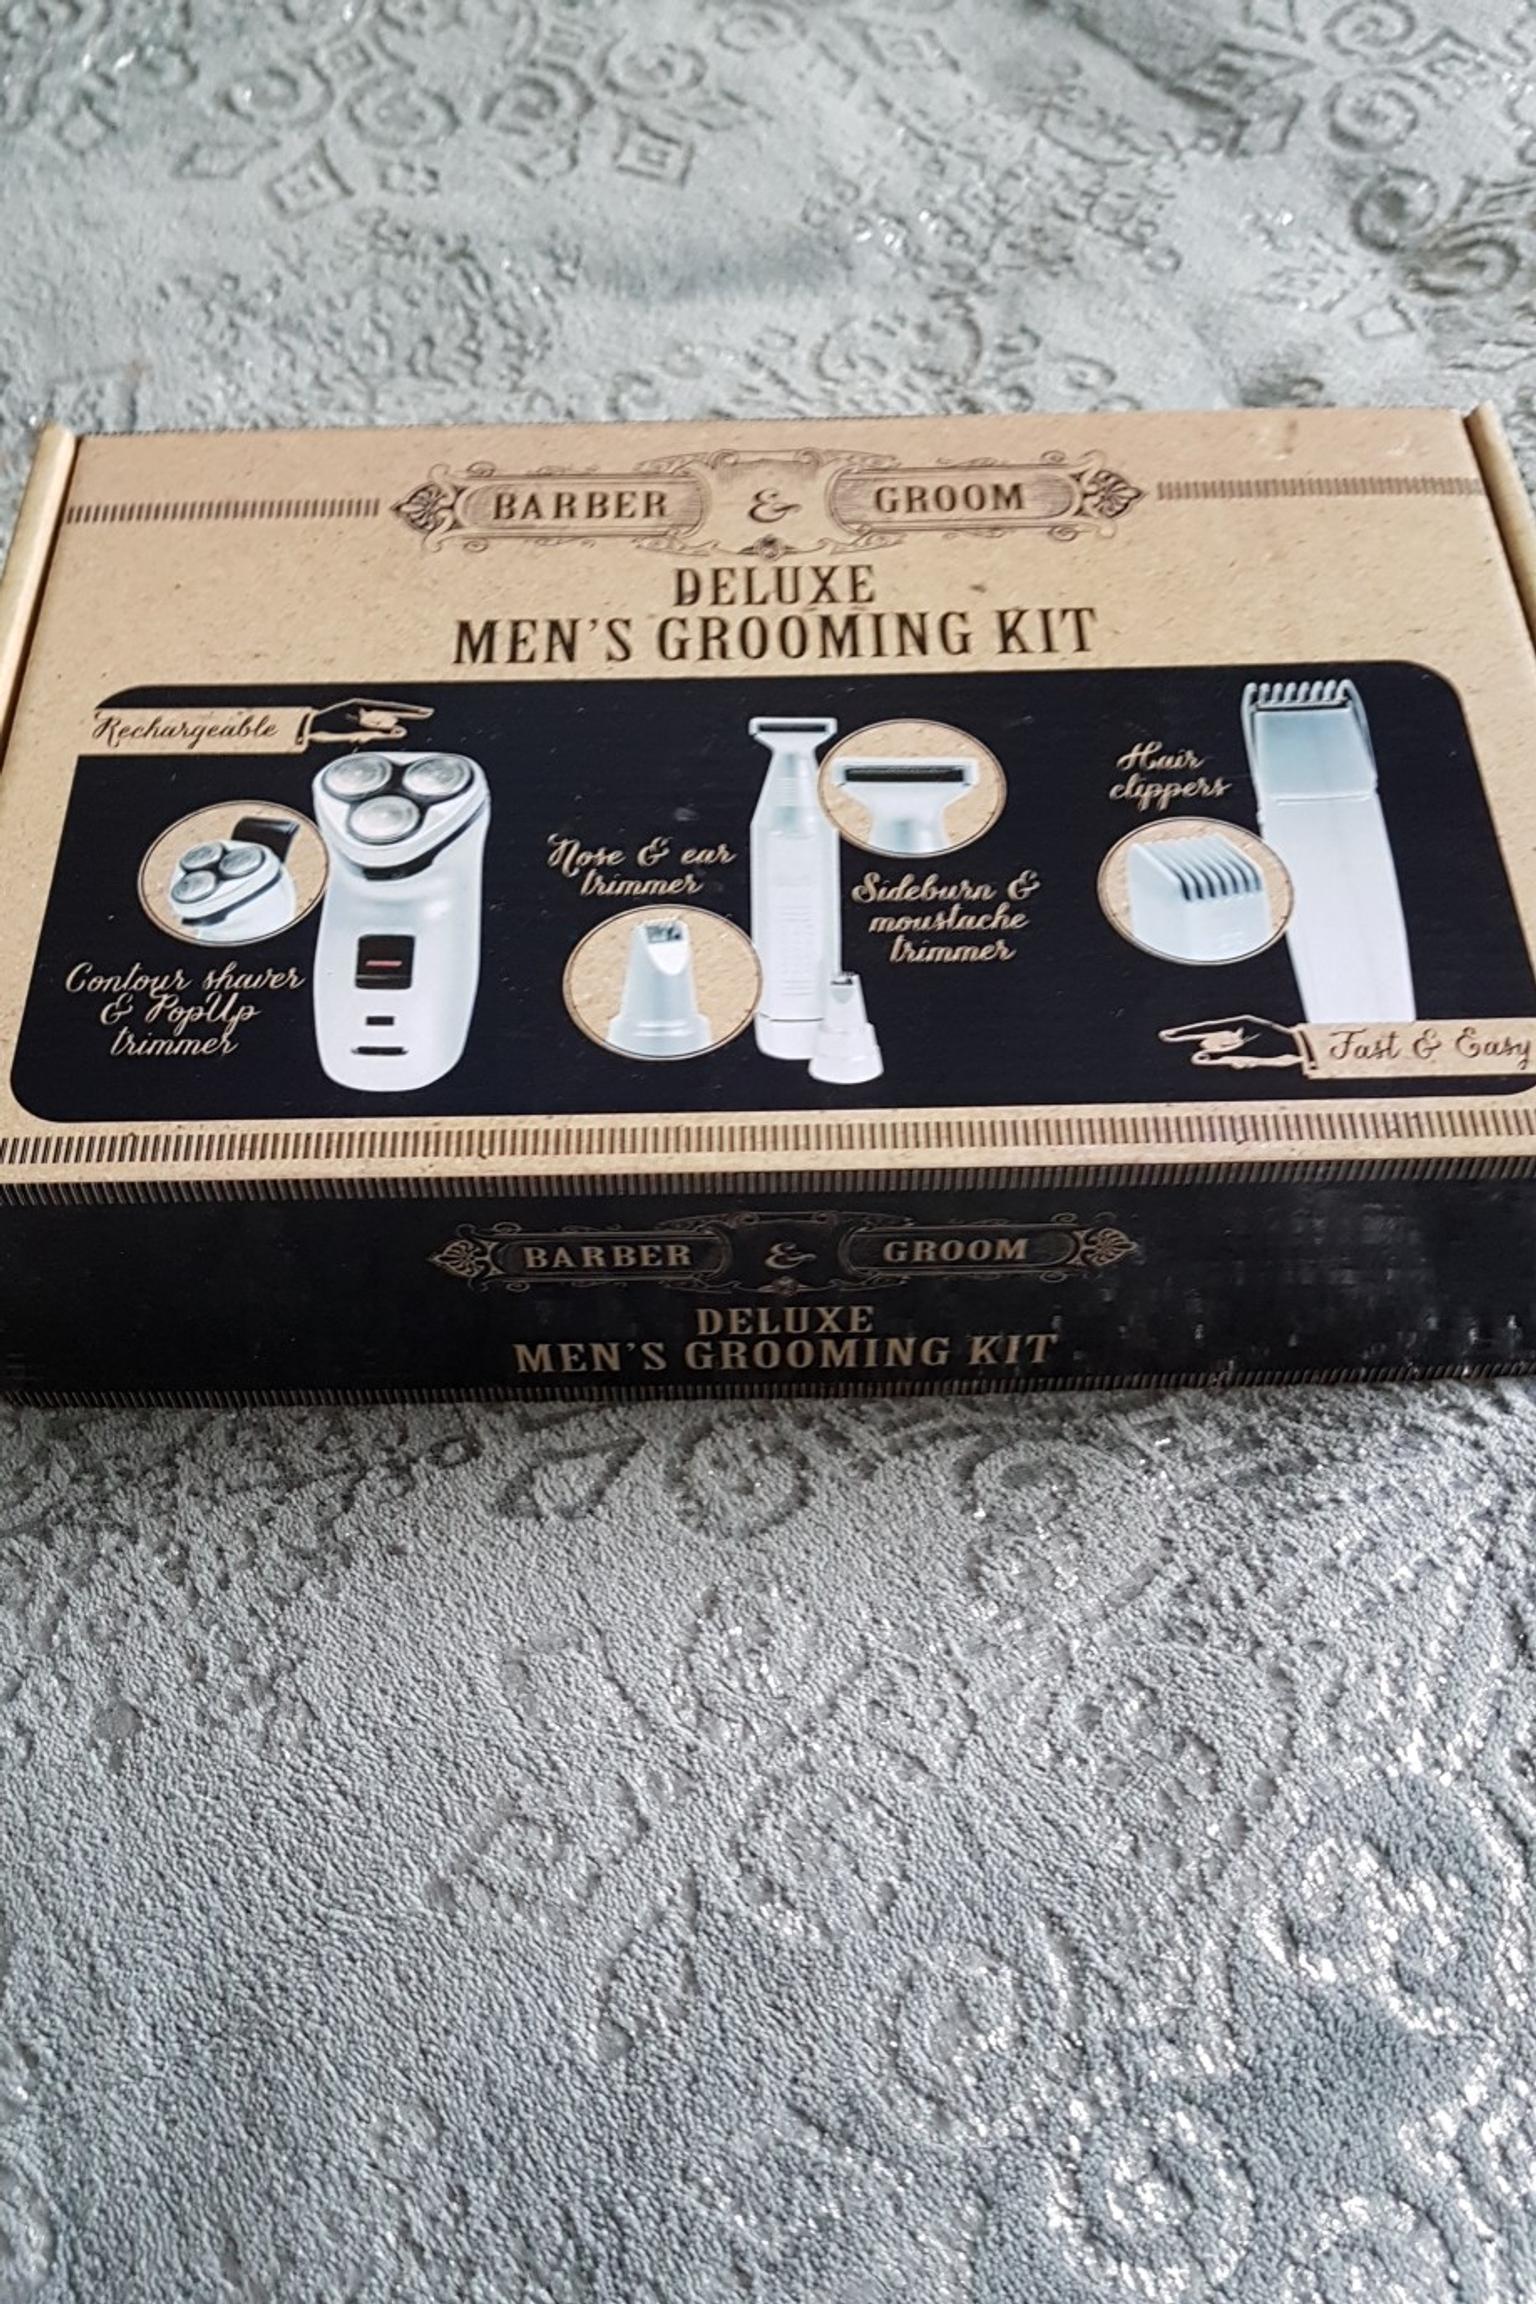 barber and groom deluxe men's grooming kit